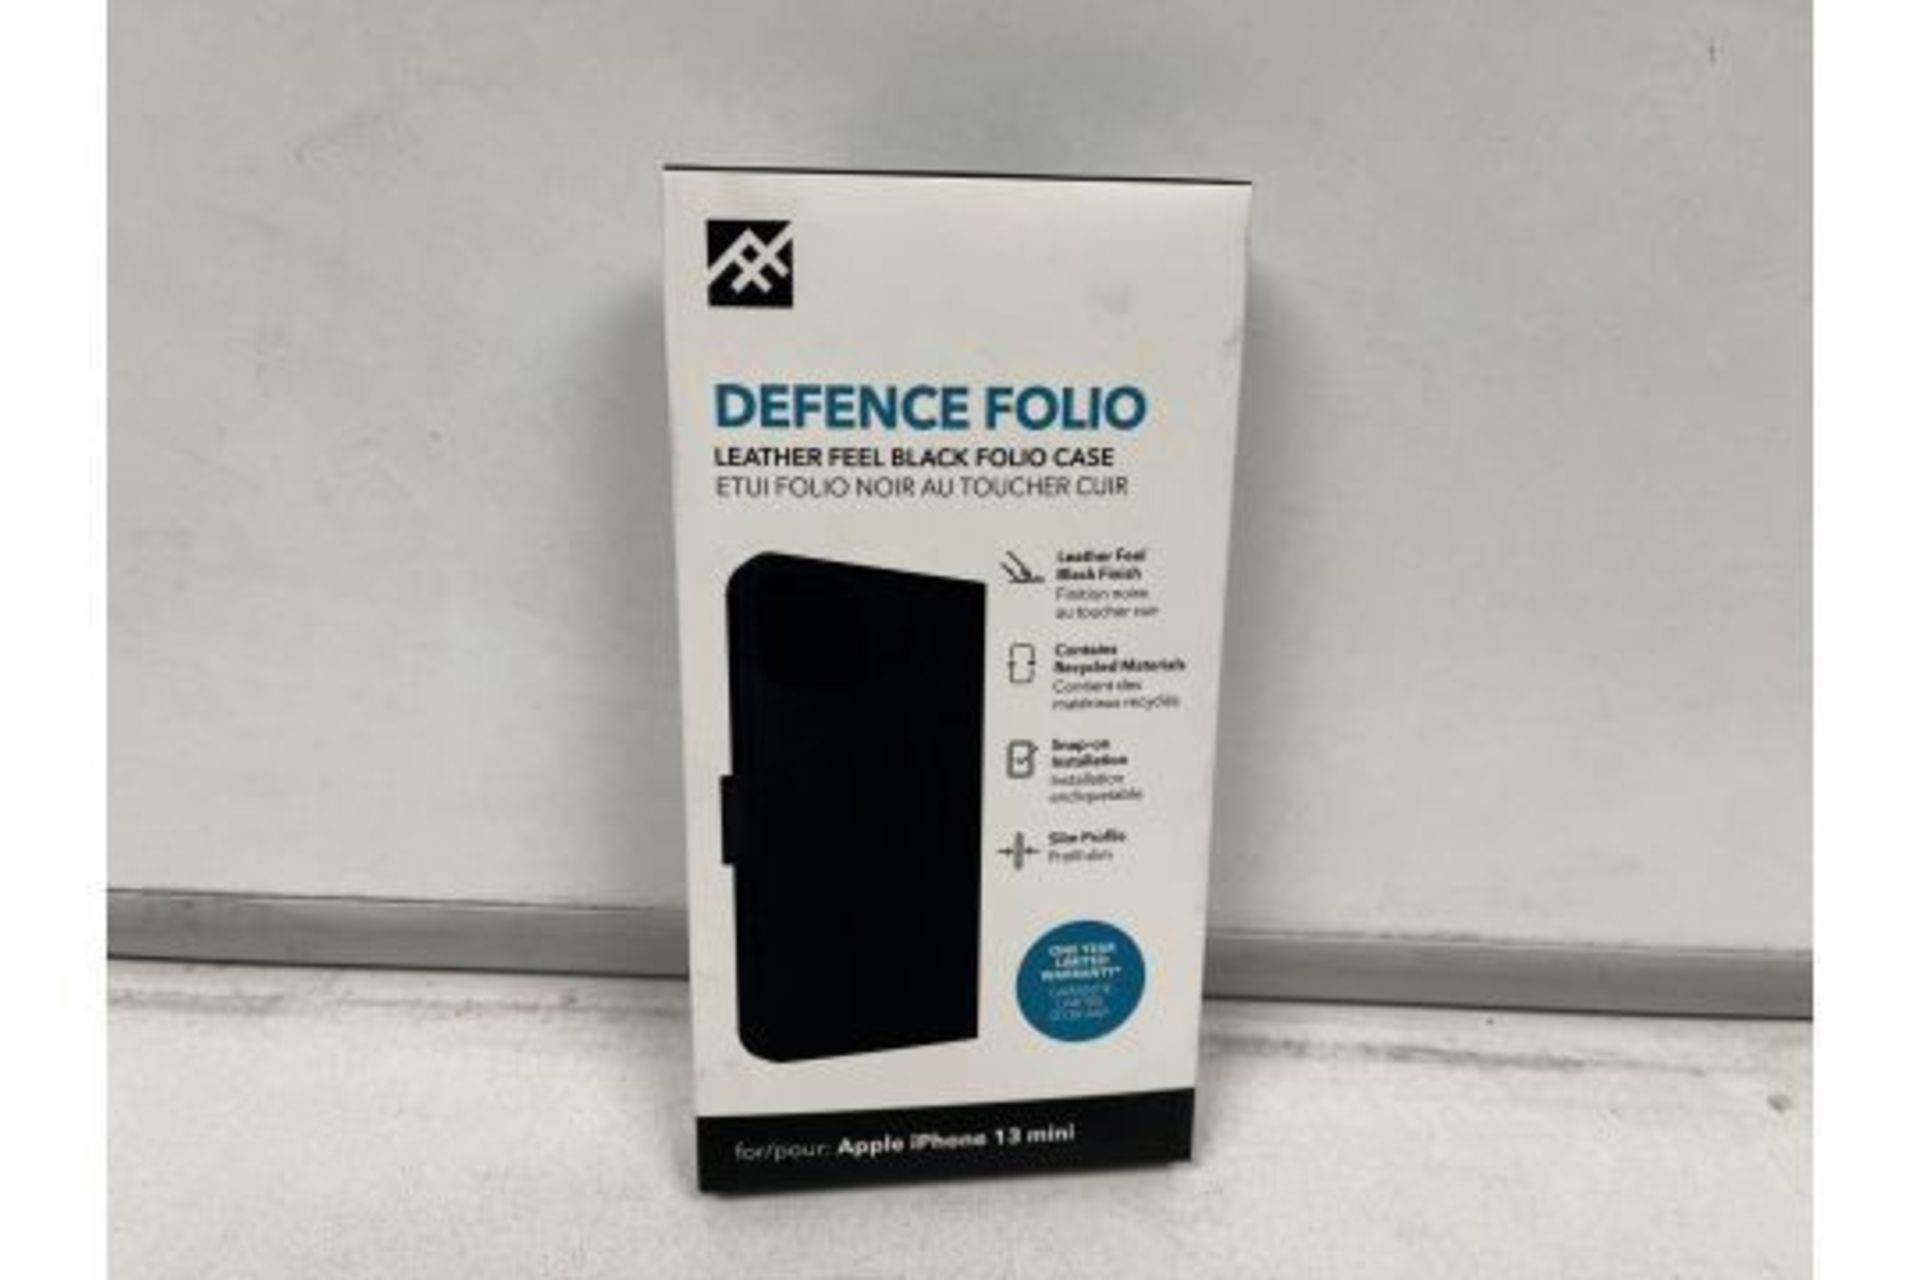 24 X NEW BOXED DEFENCE FOLIO LEATHER FEEL BLACK FOLIO CASES FOR APPLE iPHONE 13 MINI. ROW16RACK